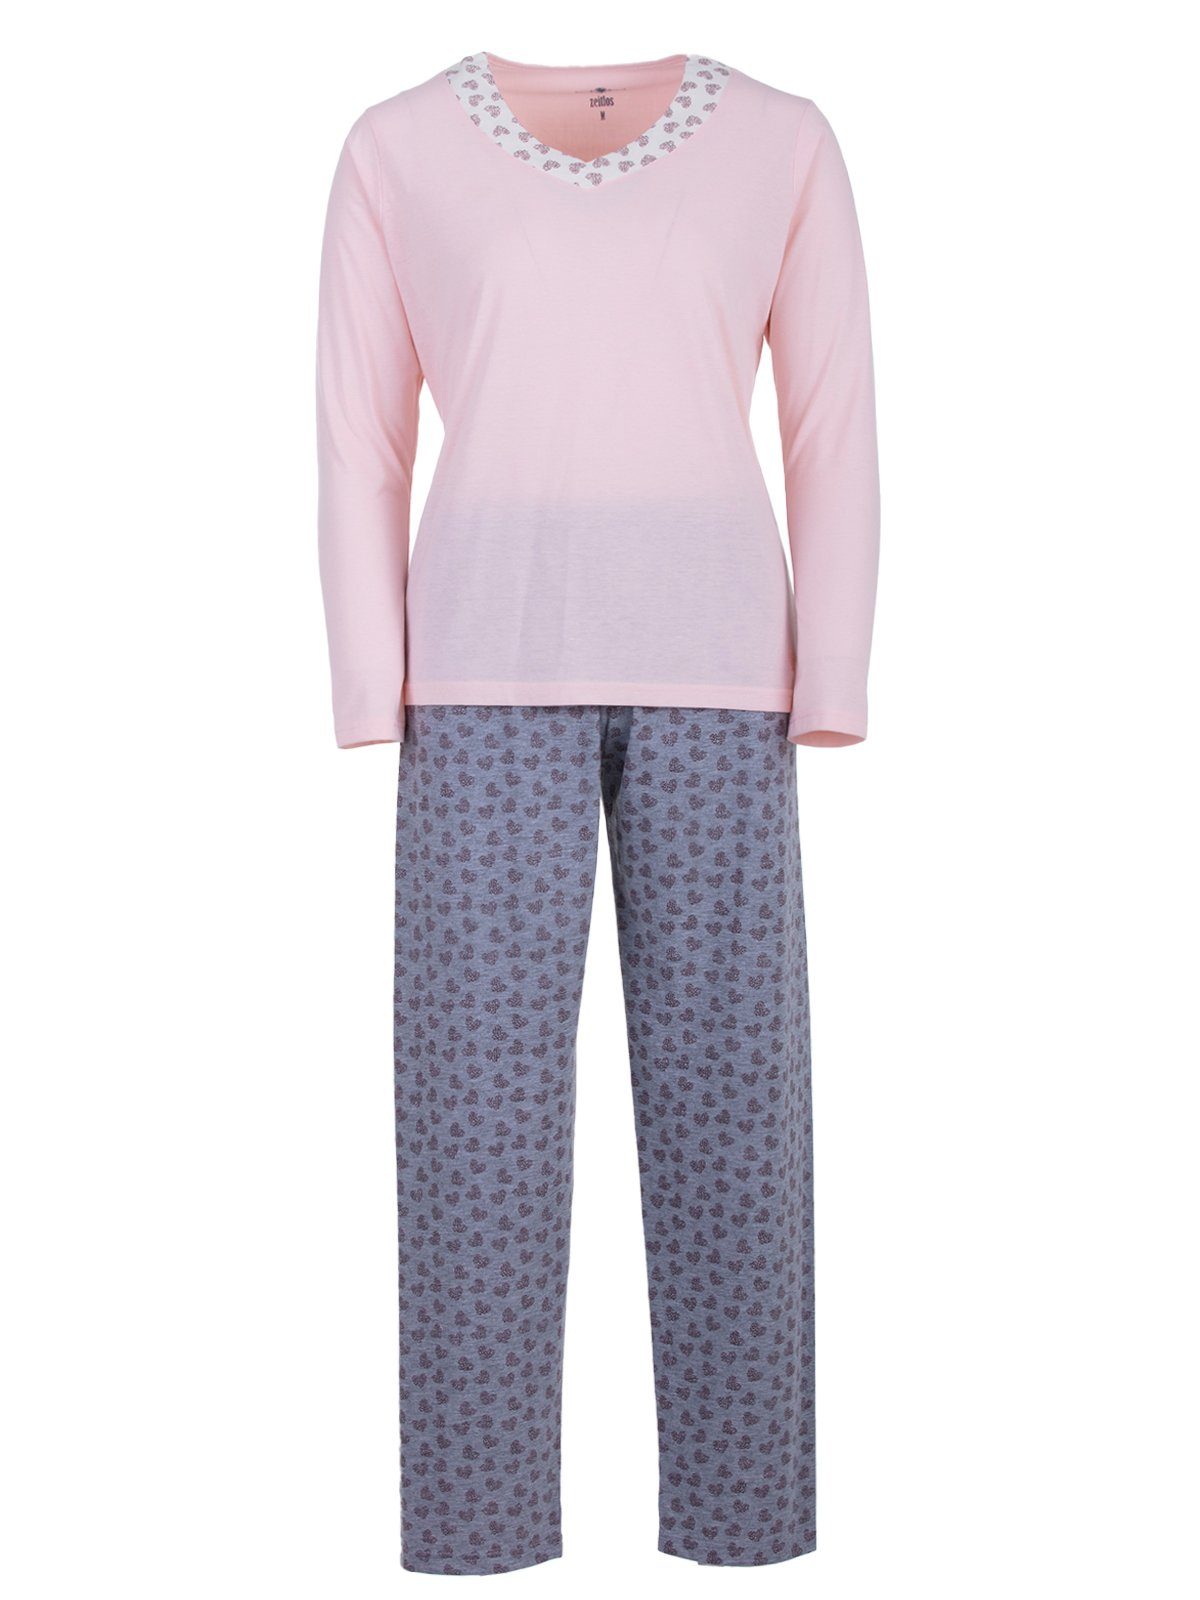 zeitlos Schlafanzug Pyjama Set Langarm - Heart rosa